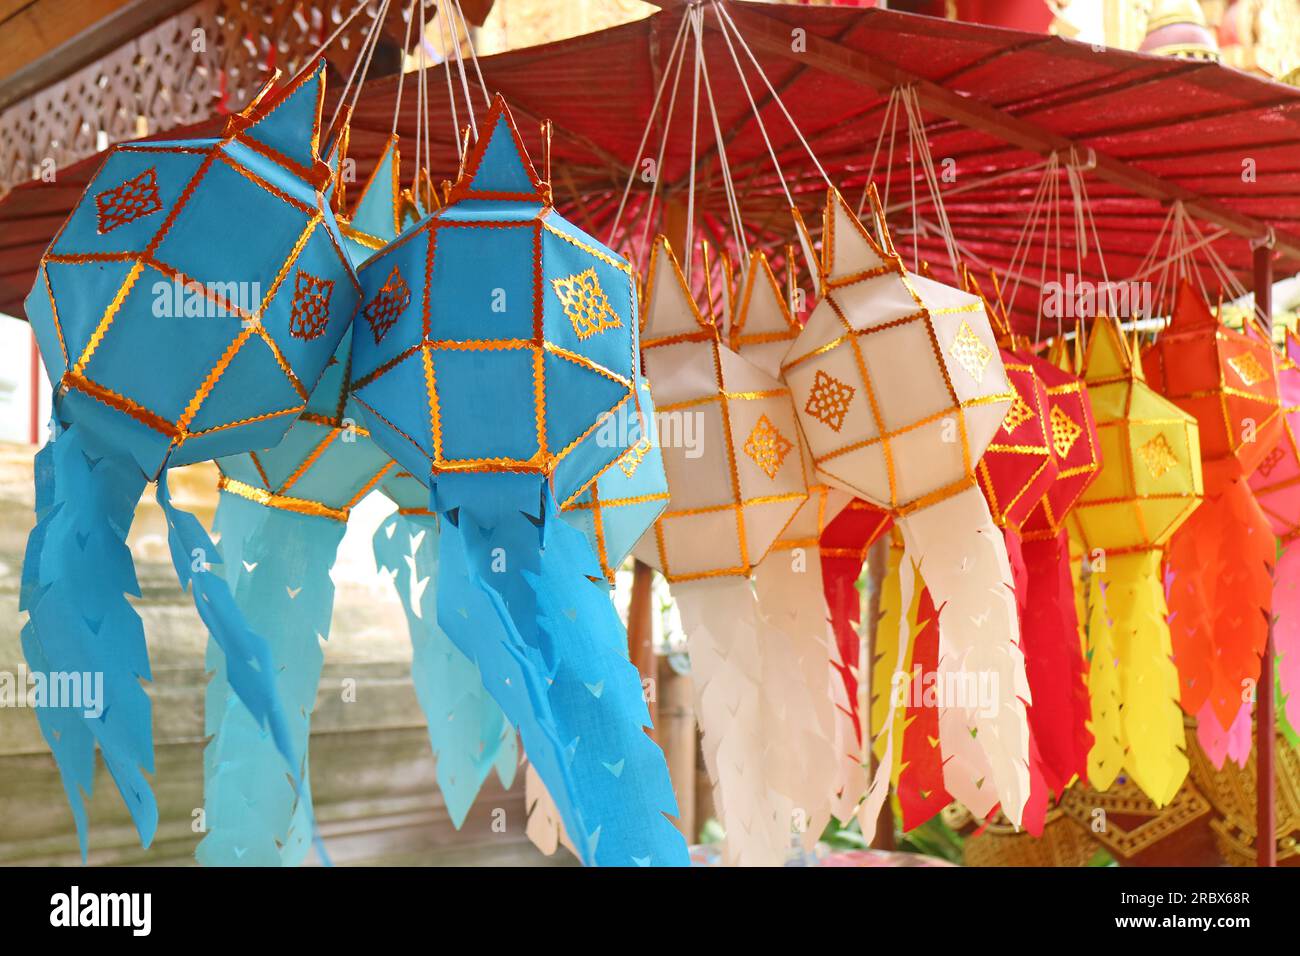 Vibrant Colored Paper Lantern or Yee Peng Lantern, Traditional Lantern of Northern Thailand Stock Photo